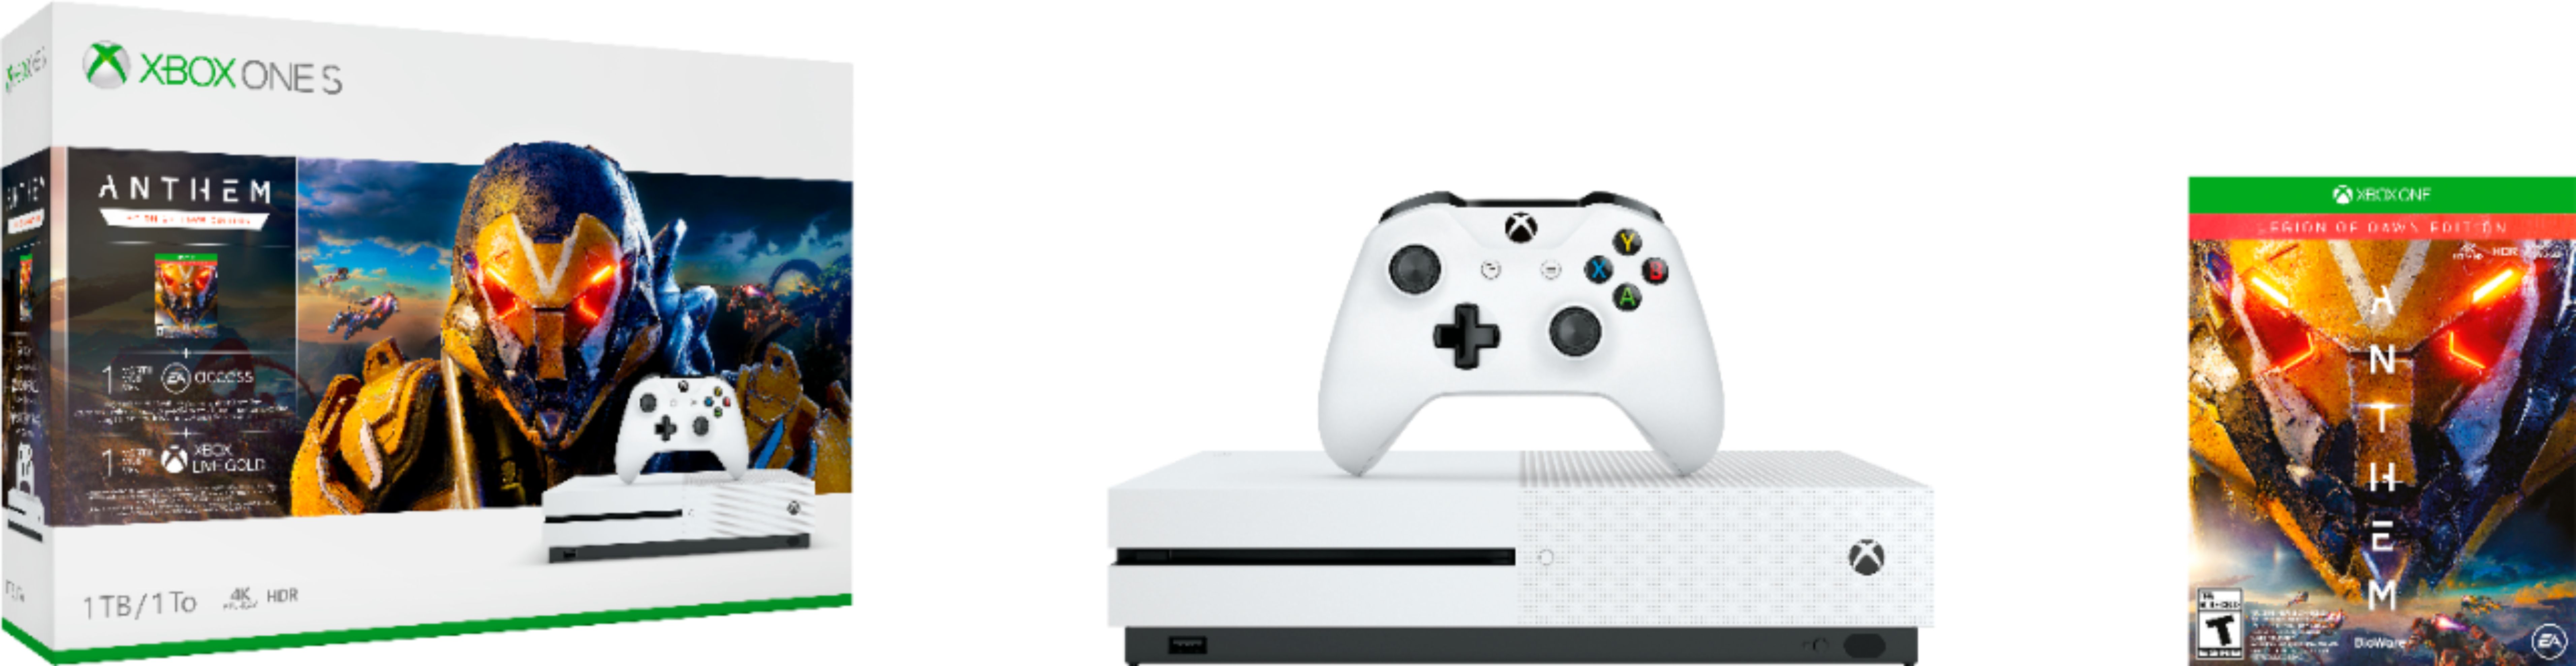 Trillen Richtlijnen Matroos Best Buy: Microsoft Xbox One S 1TB Anthem Bundle with 4K Ultra HD Blu-Ray  White 234-00938